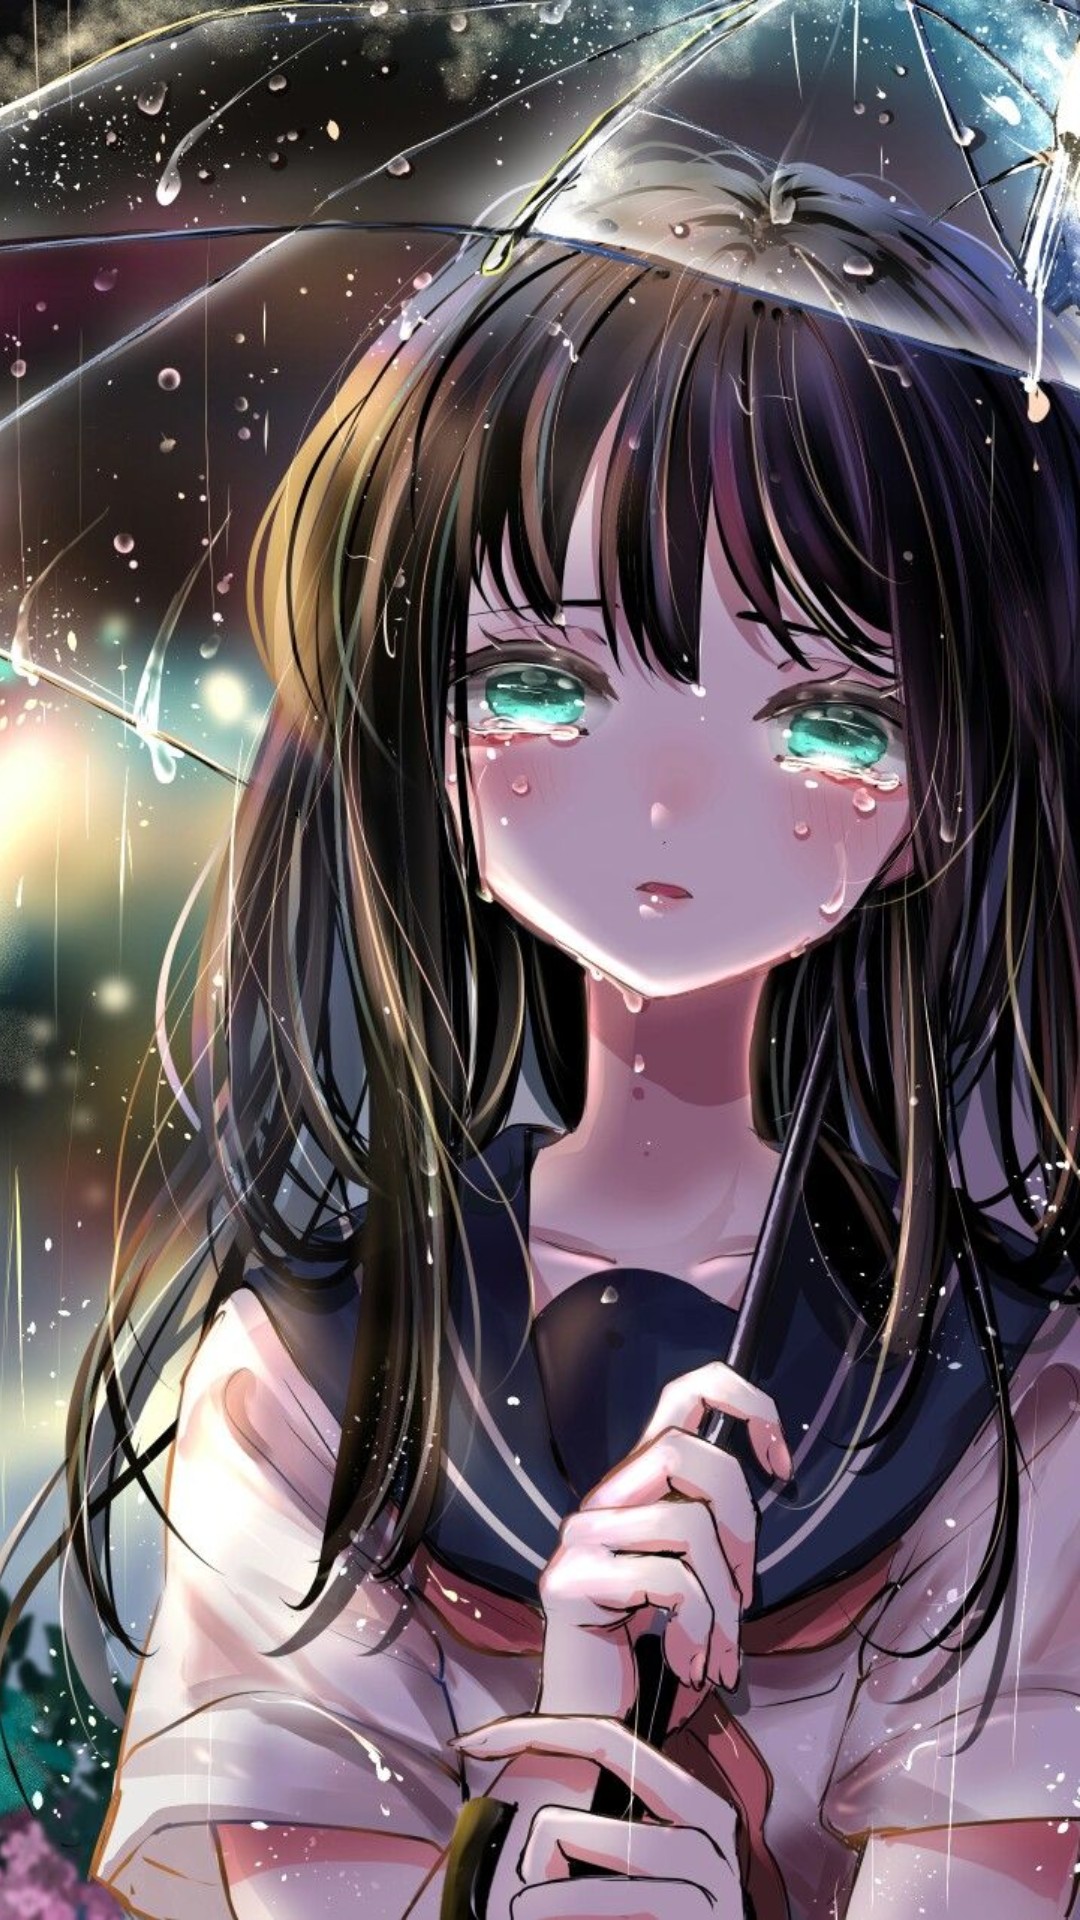 Crying Anime Girl iPhone Wallpaper